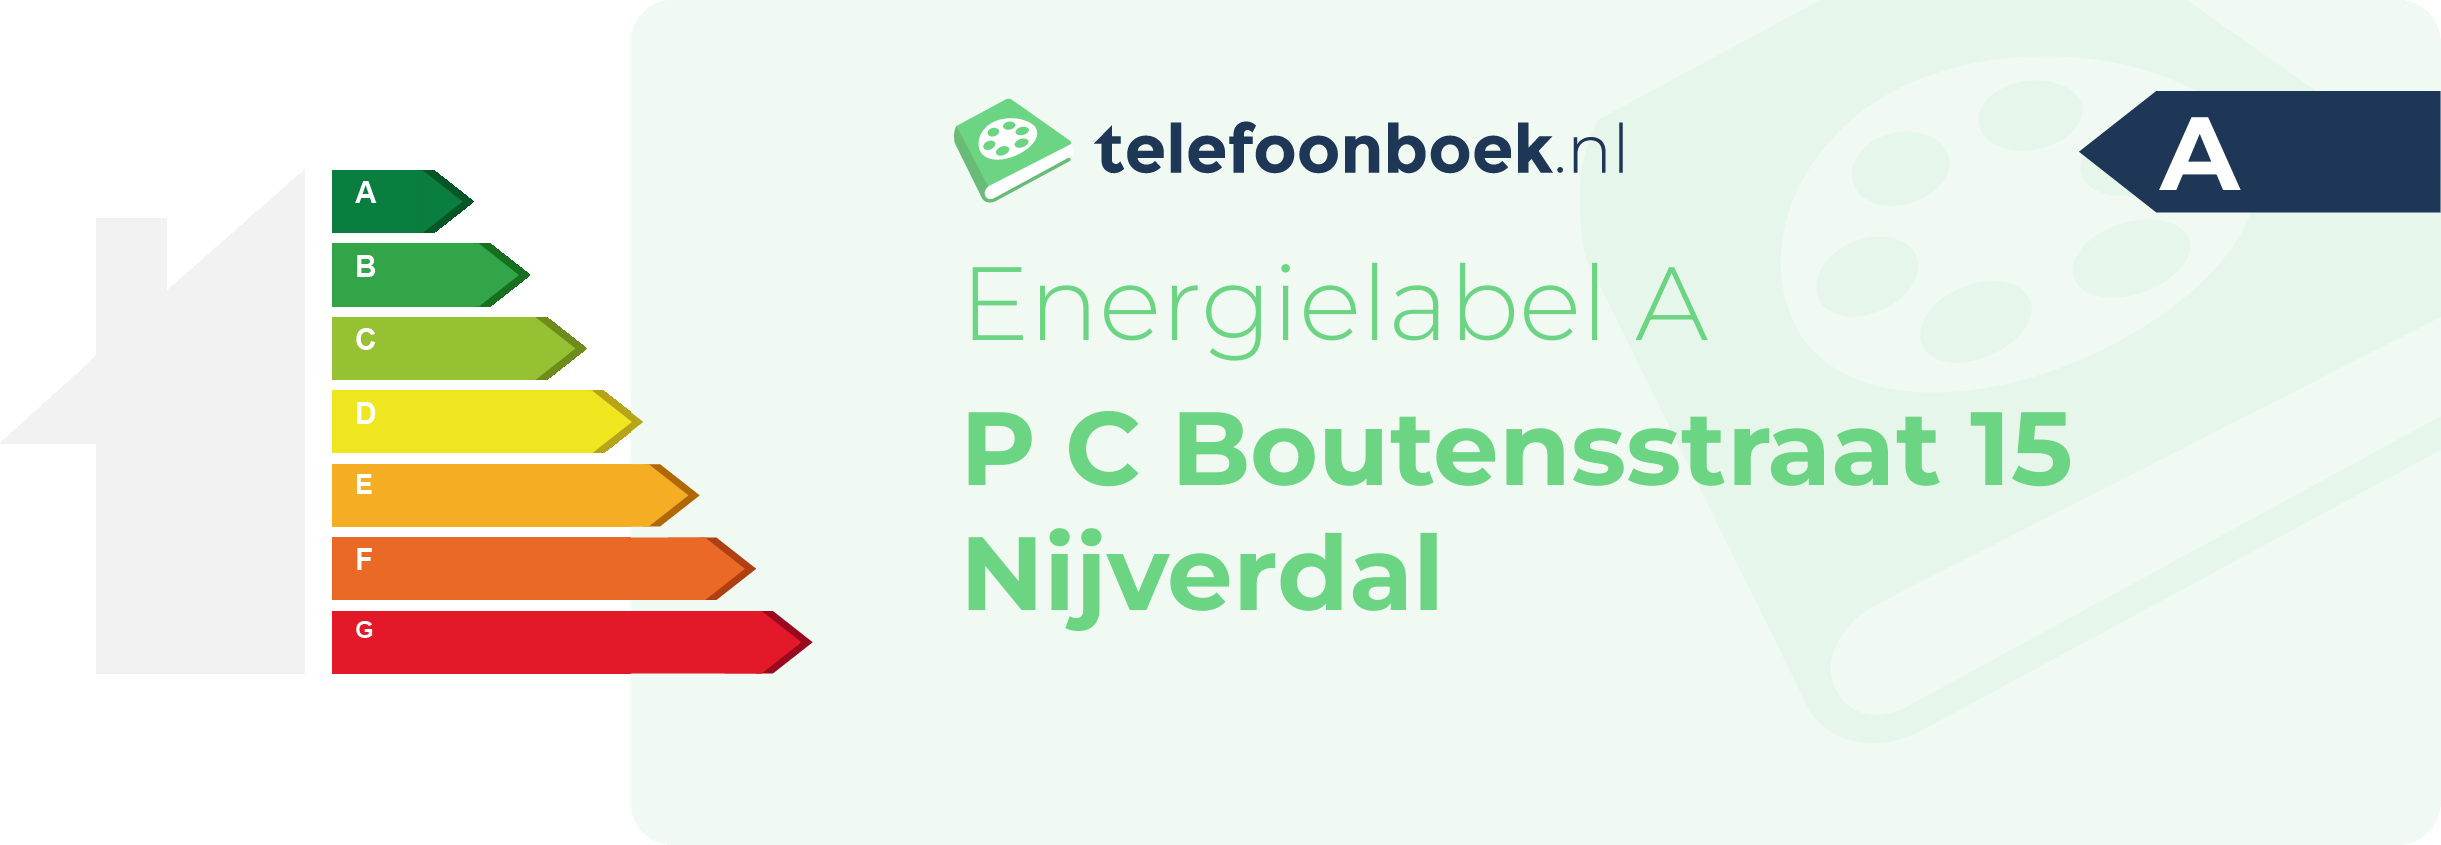 Energielabel P C Boutensstraat 15 Nijverdal